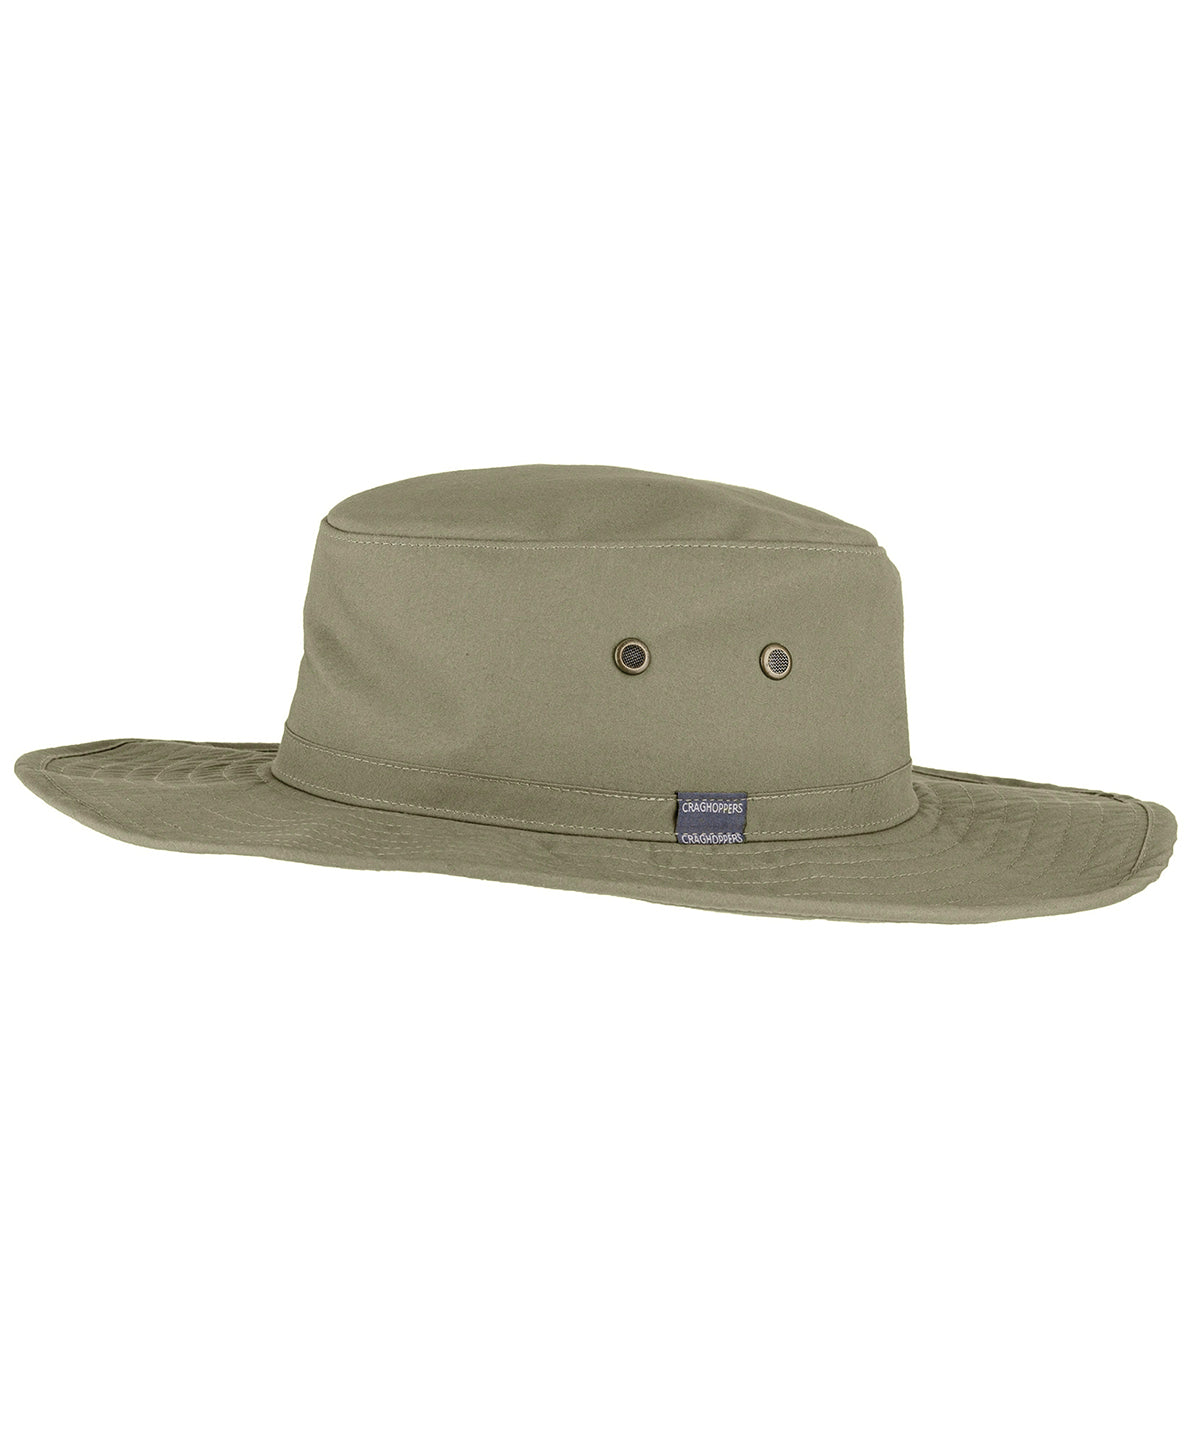 Craghoppers Expert Kiwi ranger hat